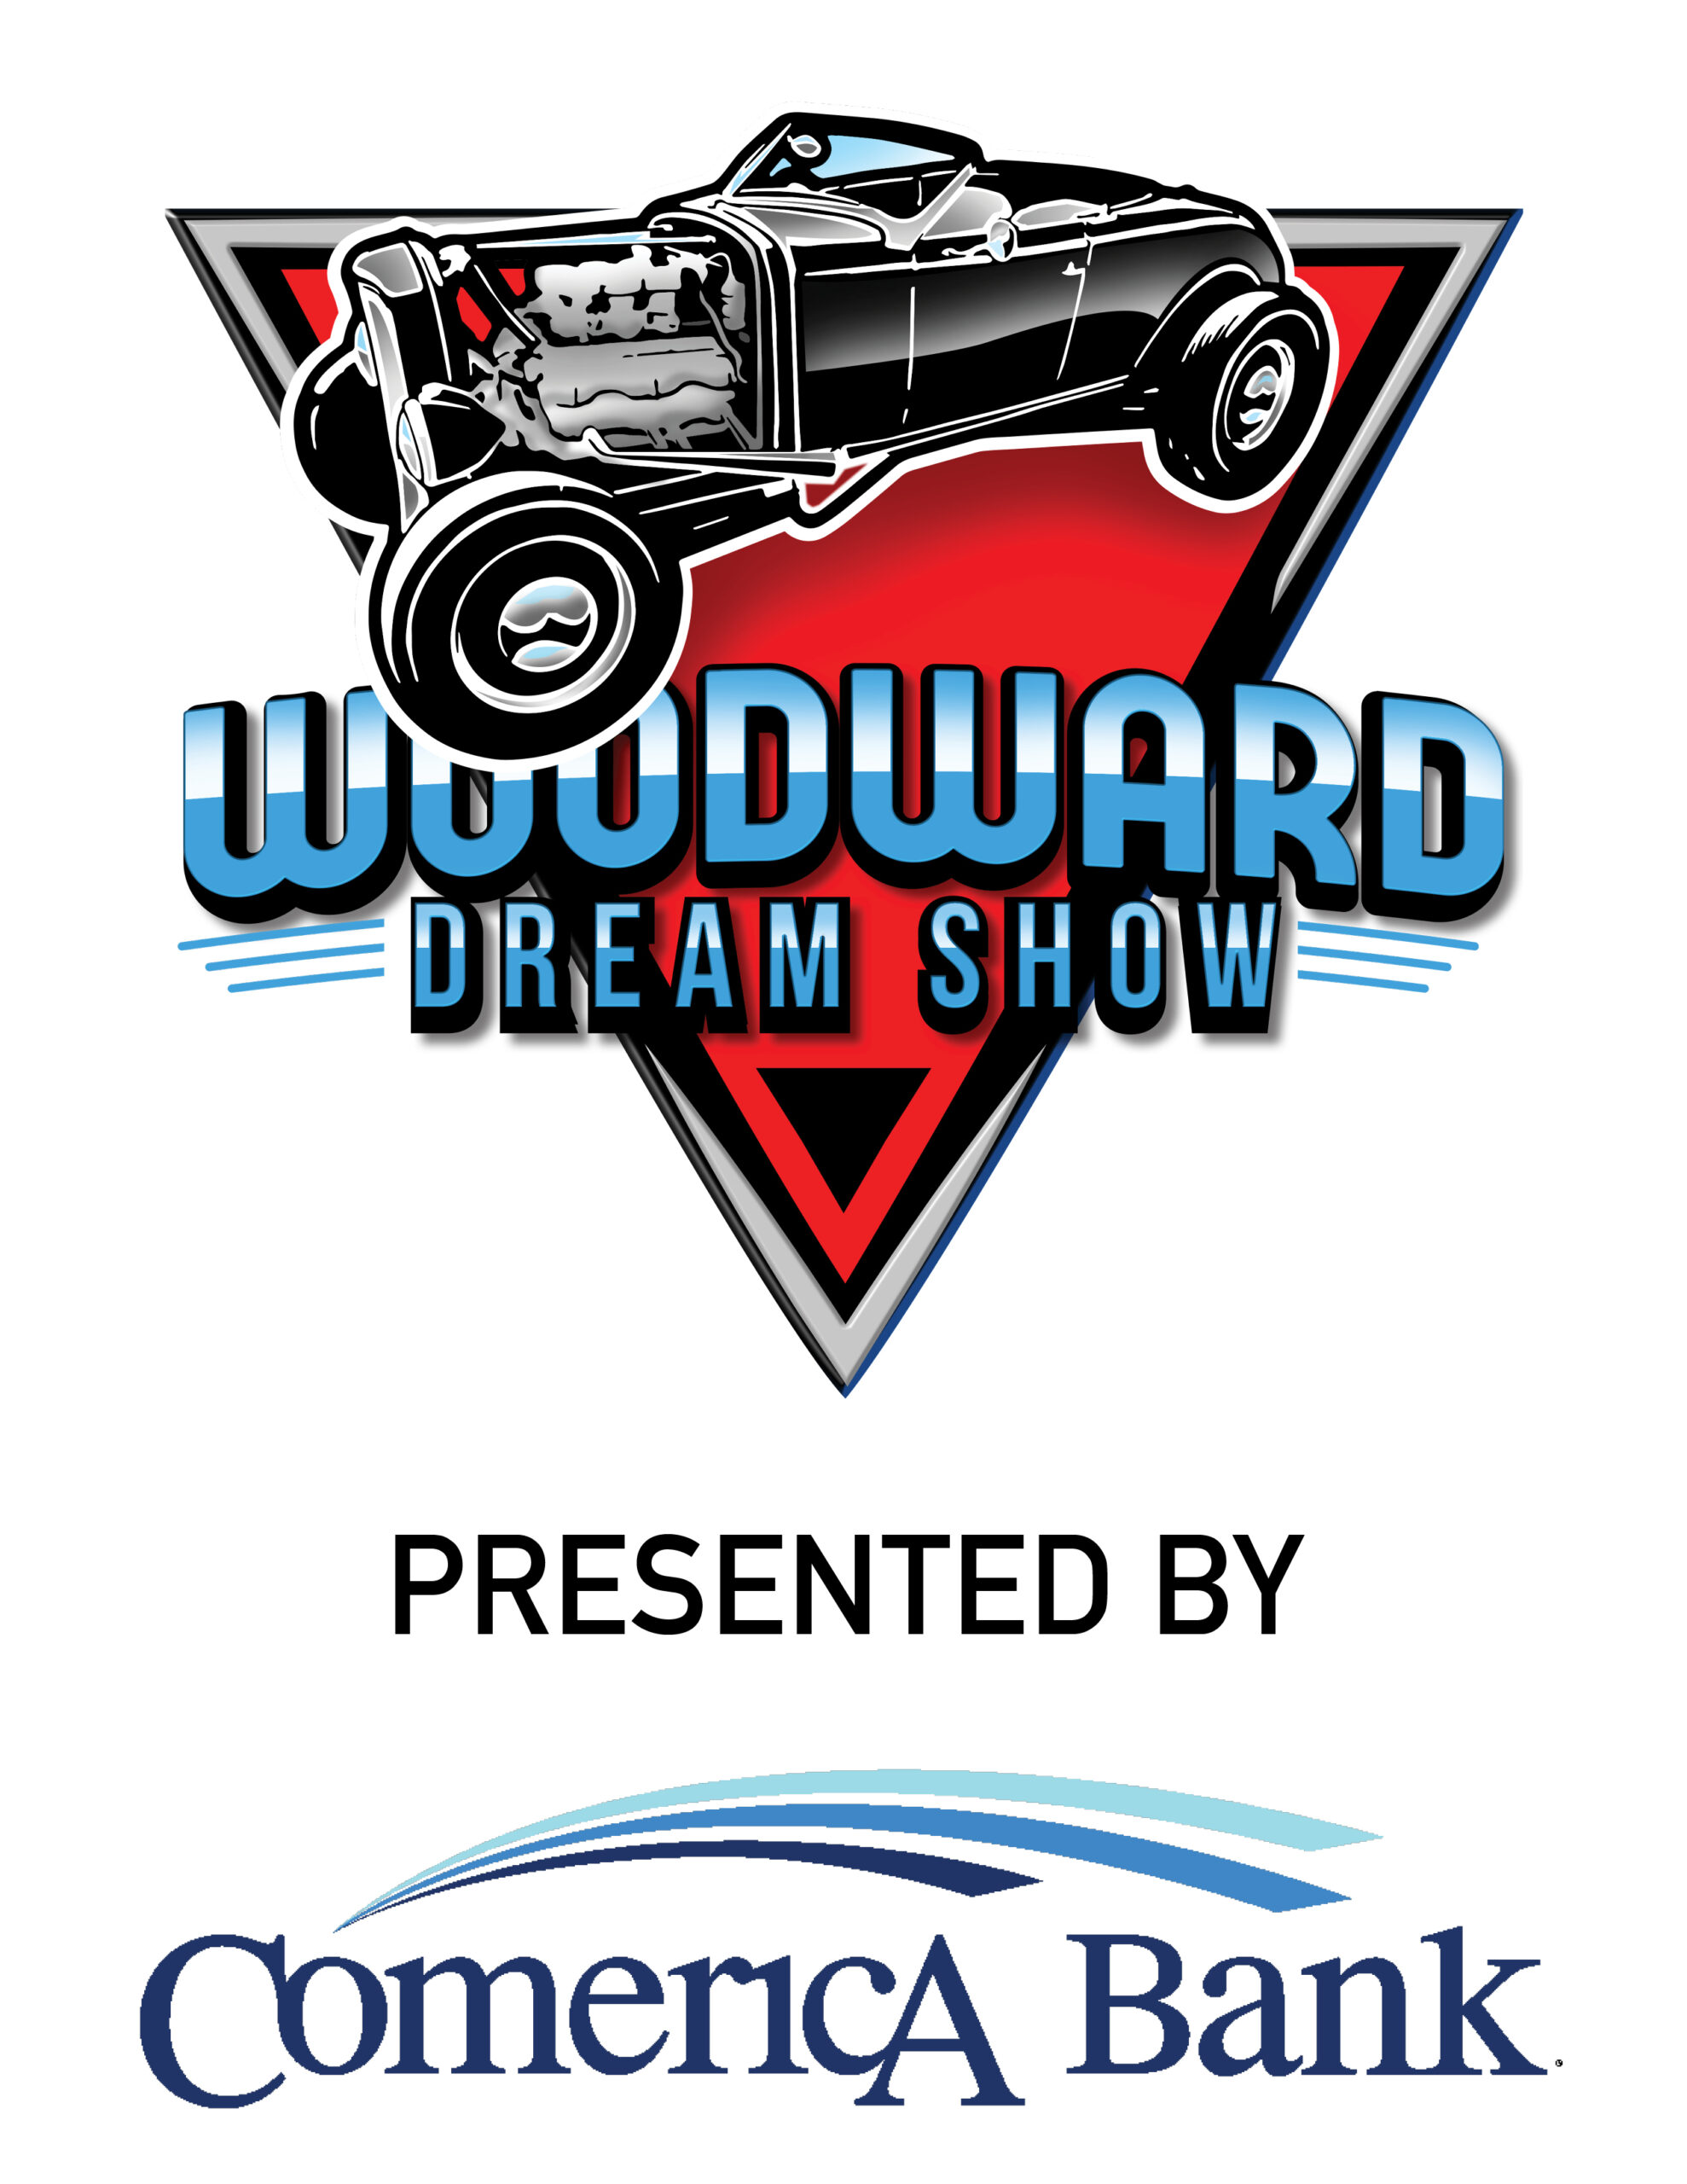 Woodward Dream Show logo